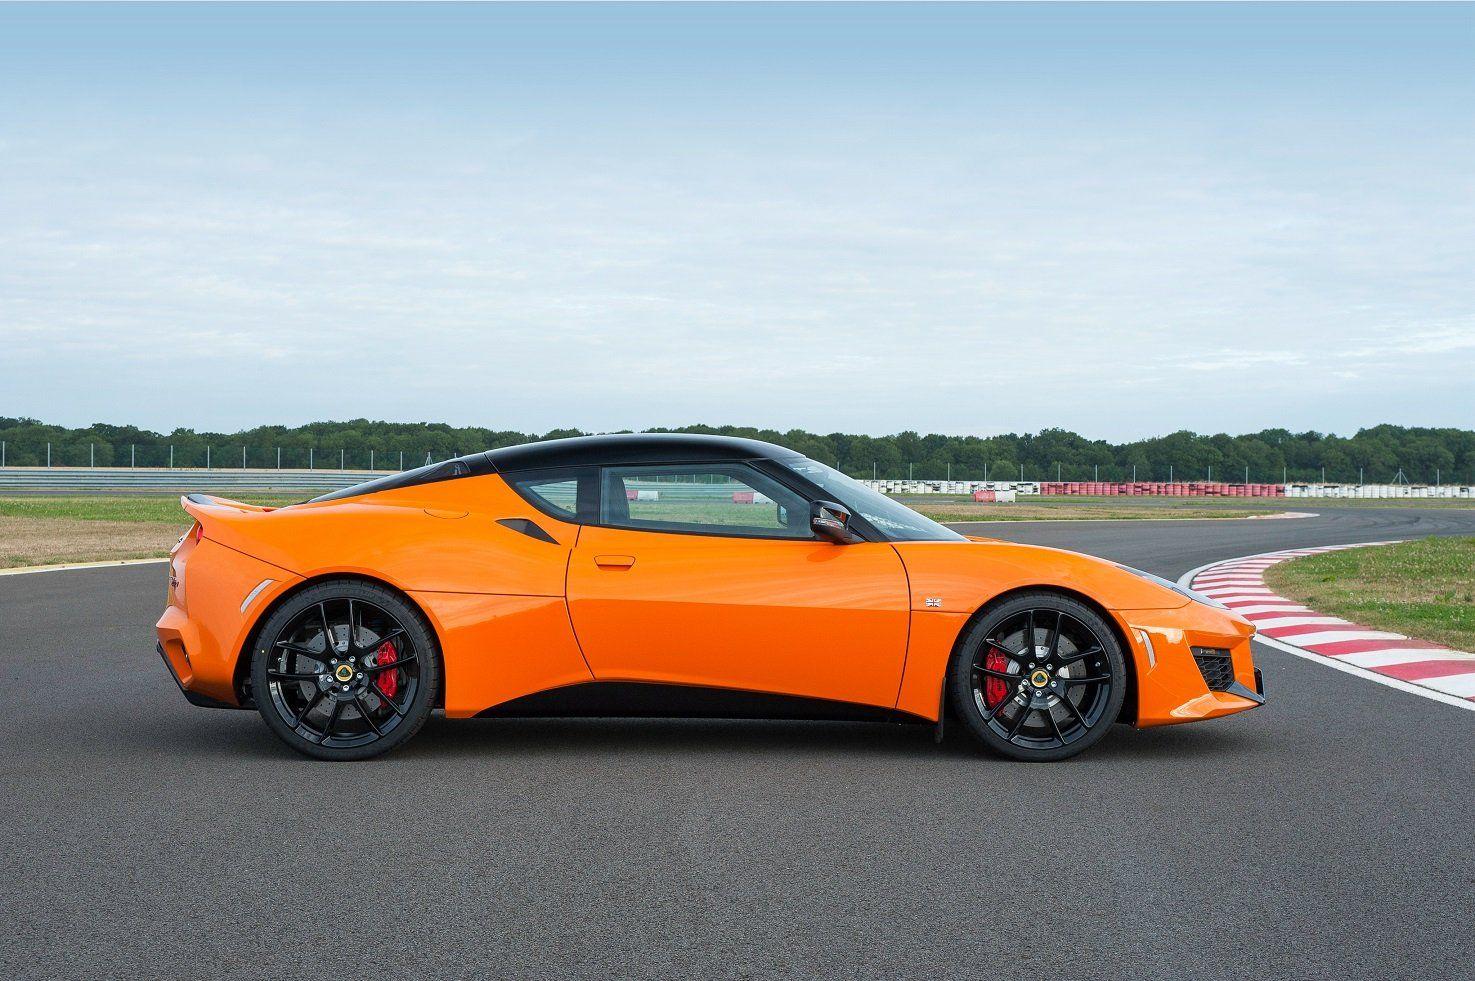 Lotus Evora 400 UK Spec Cars Orange Coupe 2015 Wallpaper